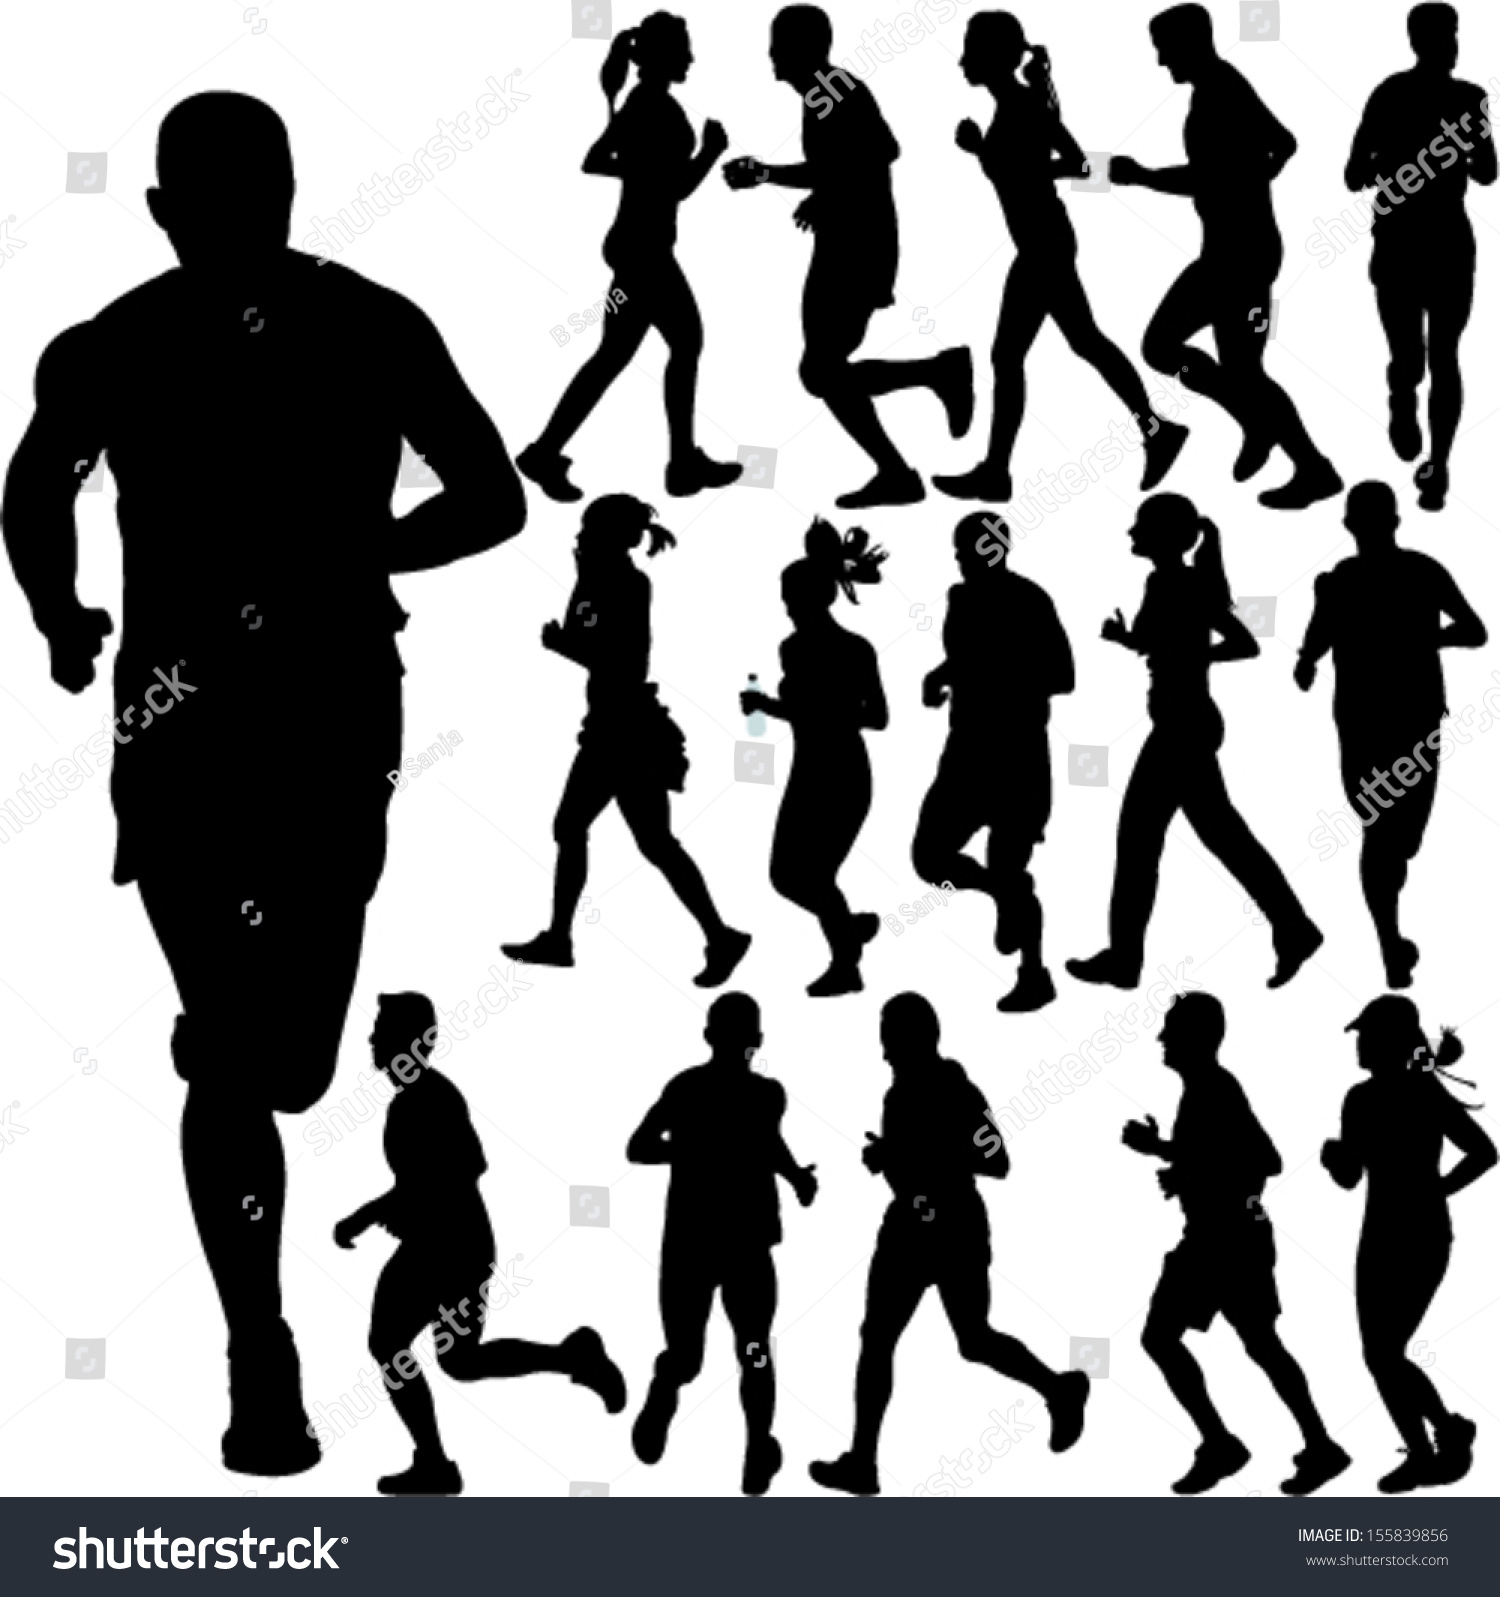 Running People Collection Vector Stock Vector 155839856 - Shutterstock